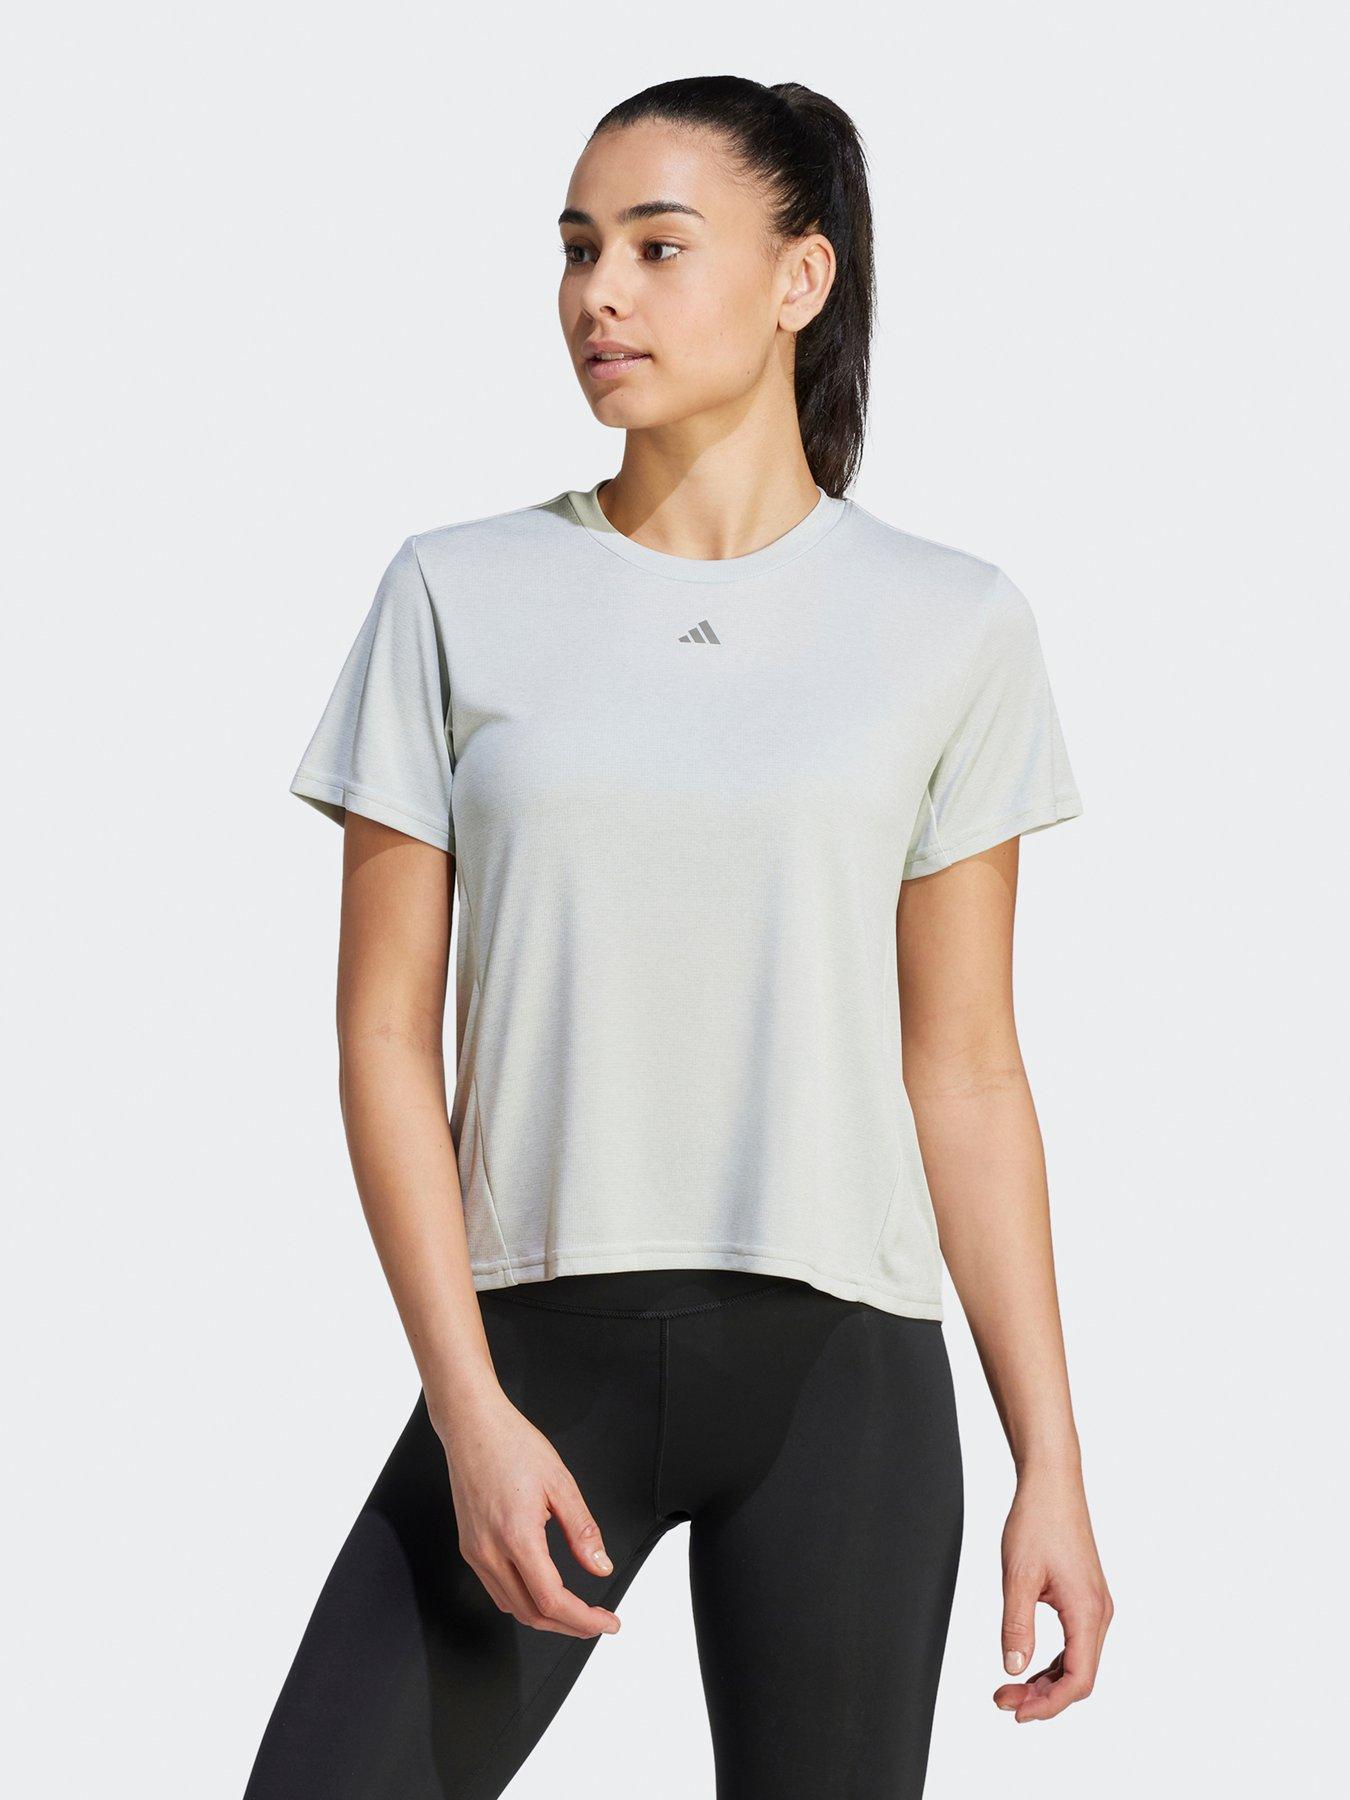 Nike The One Slim Fit Short Sleeve Tee - Light Grey